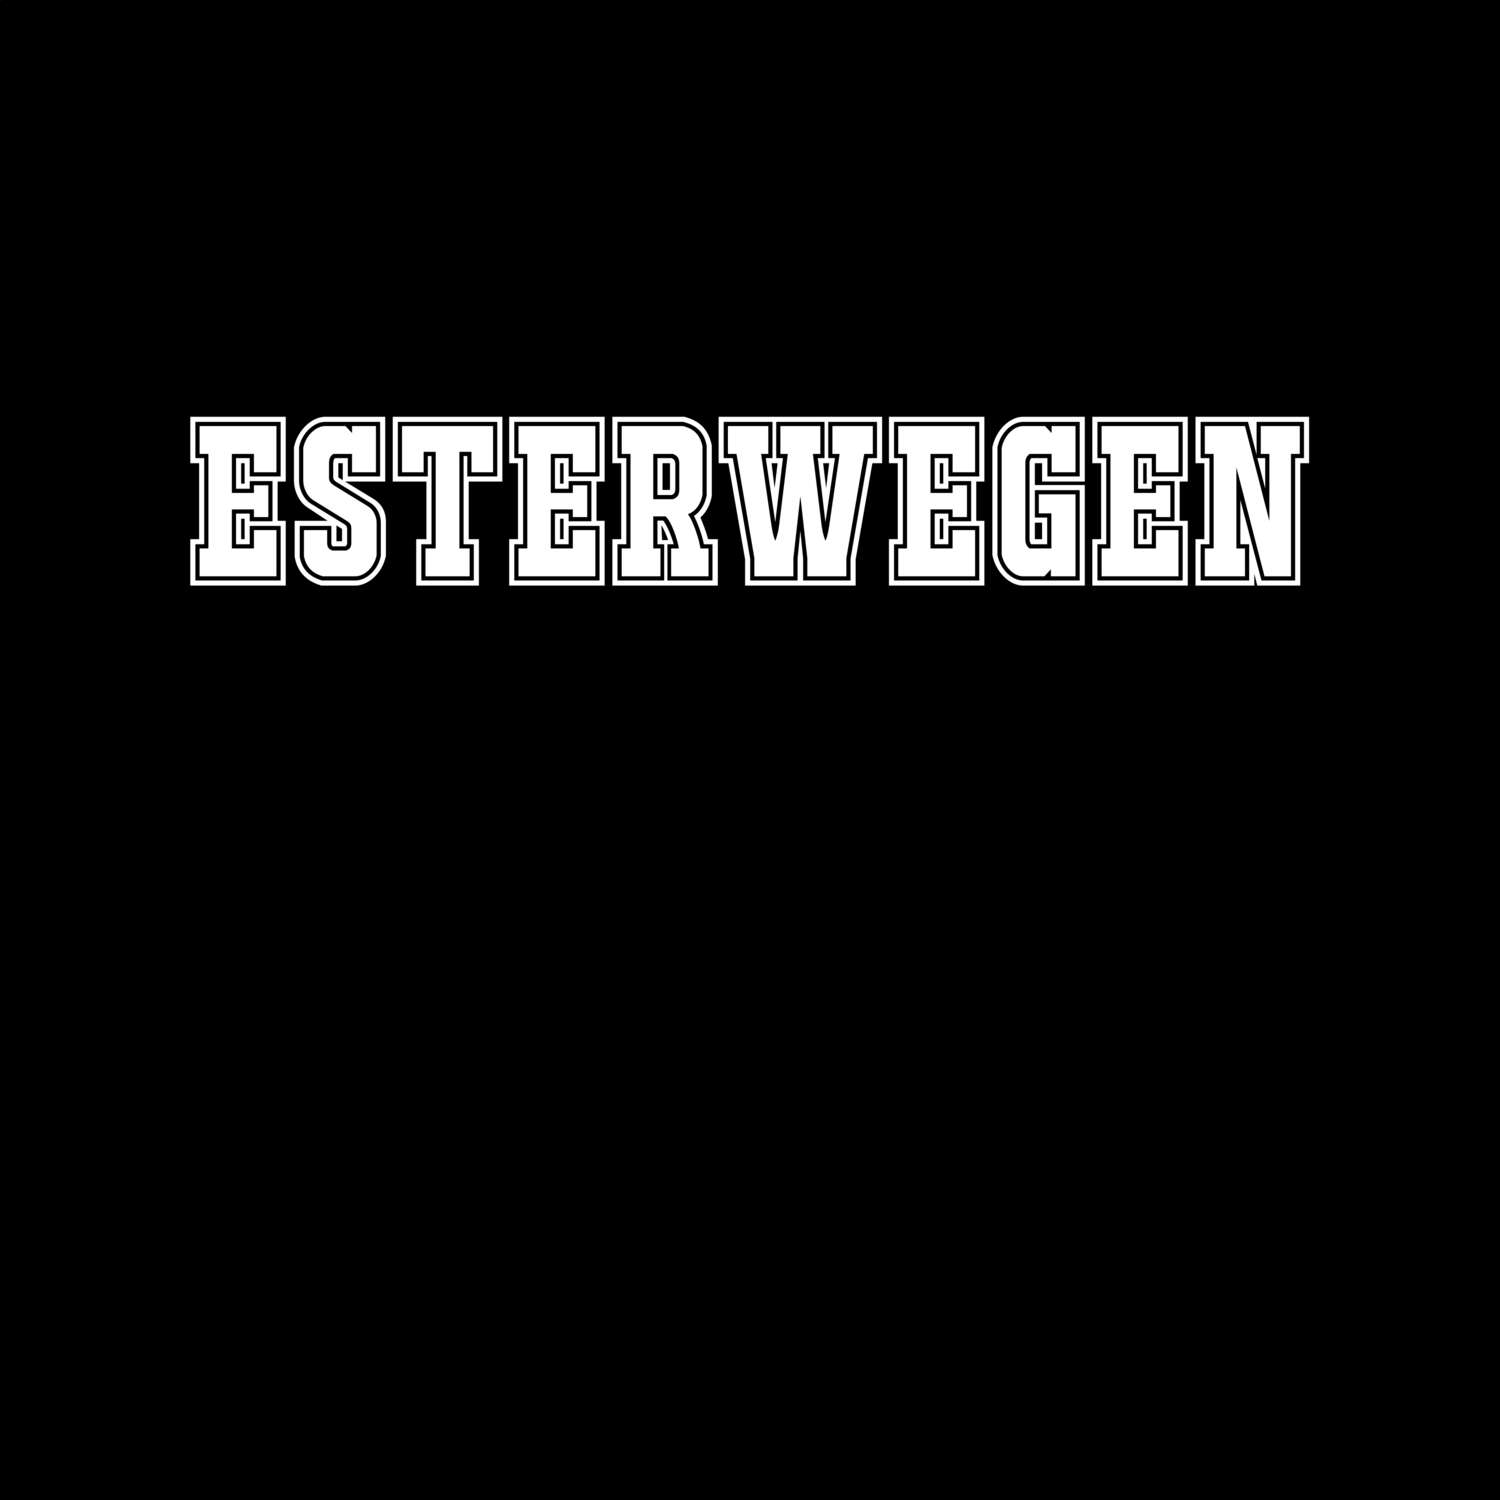 Esterwegen T-Shirt »Classic«